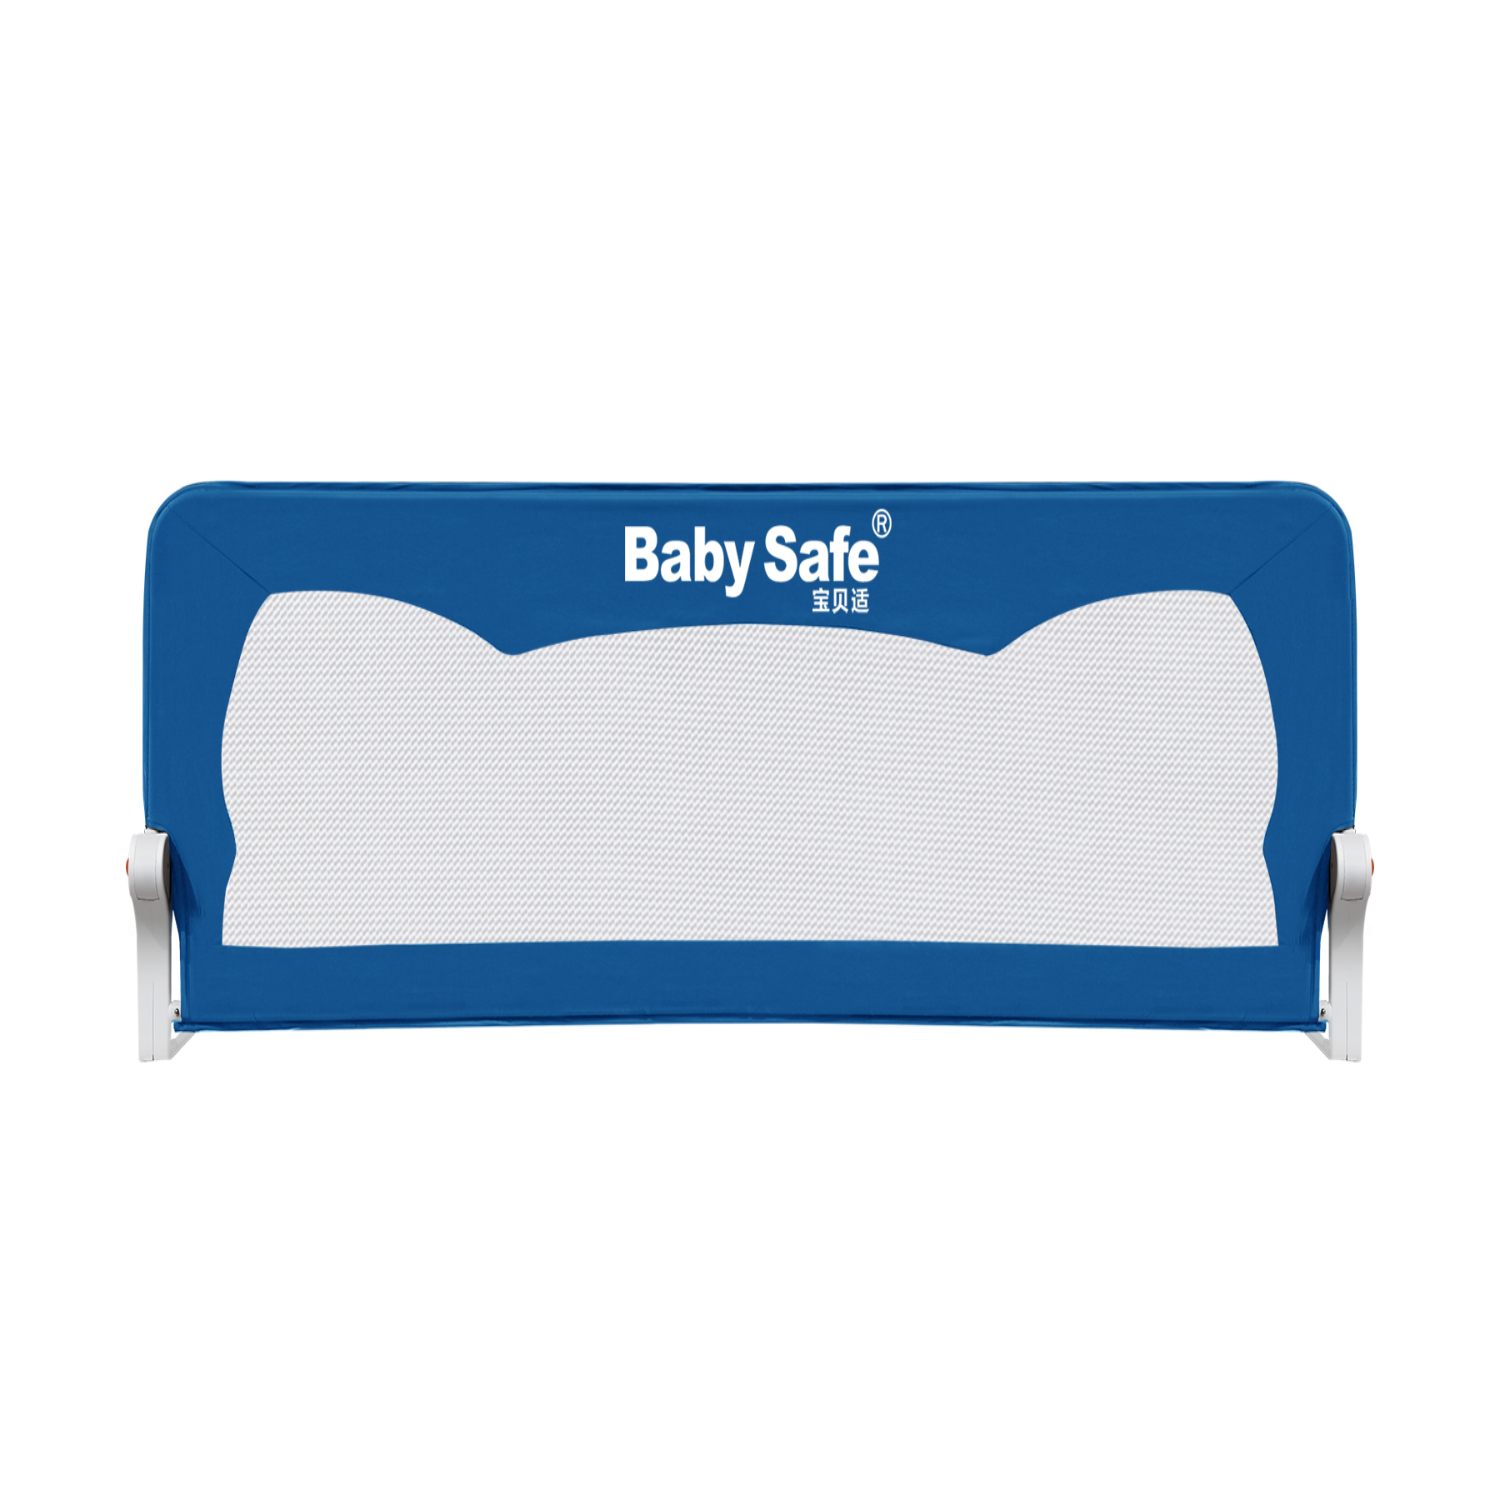 барьер защитный для кровати Baby Safe Ушки 150х66 синий - фото 2